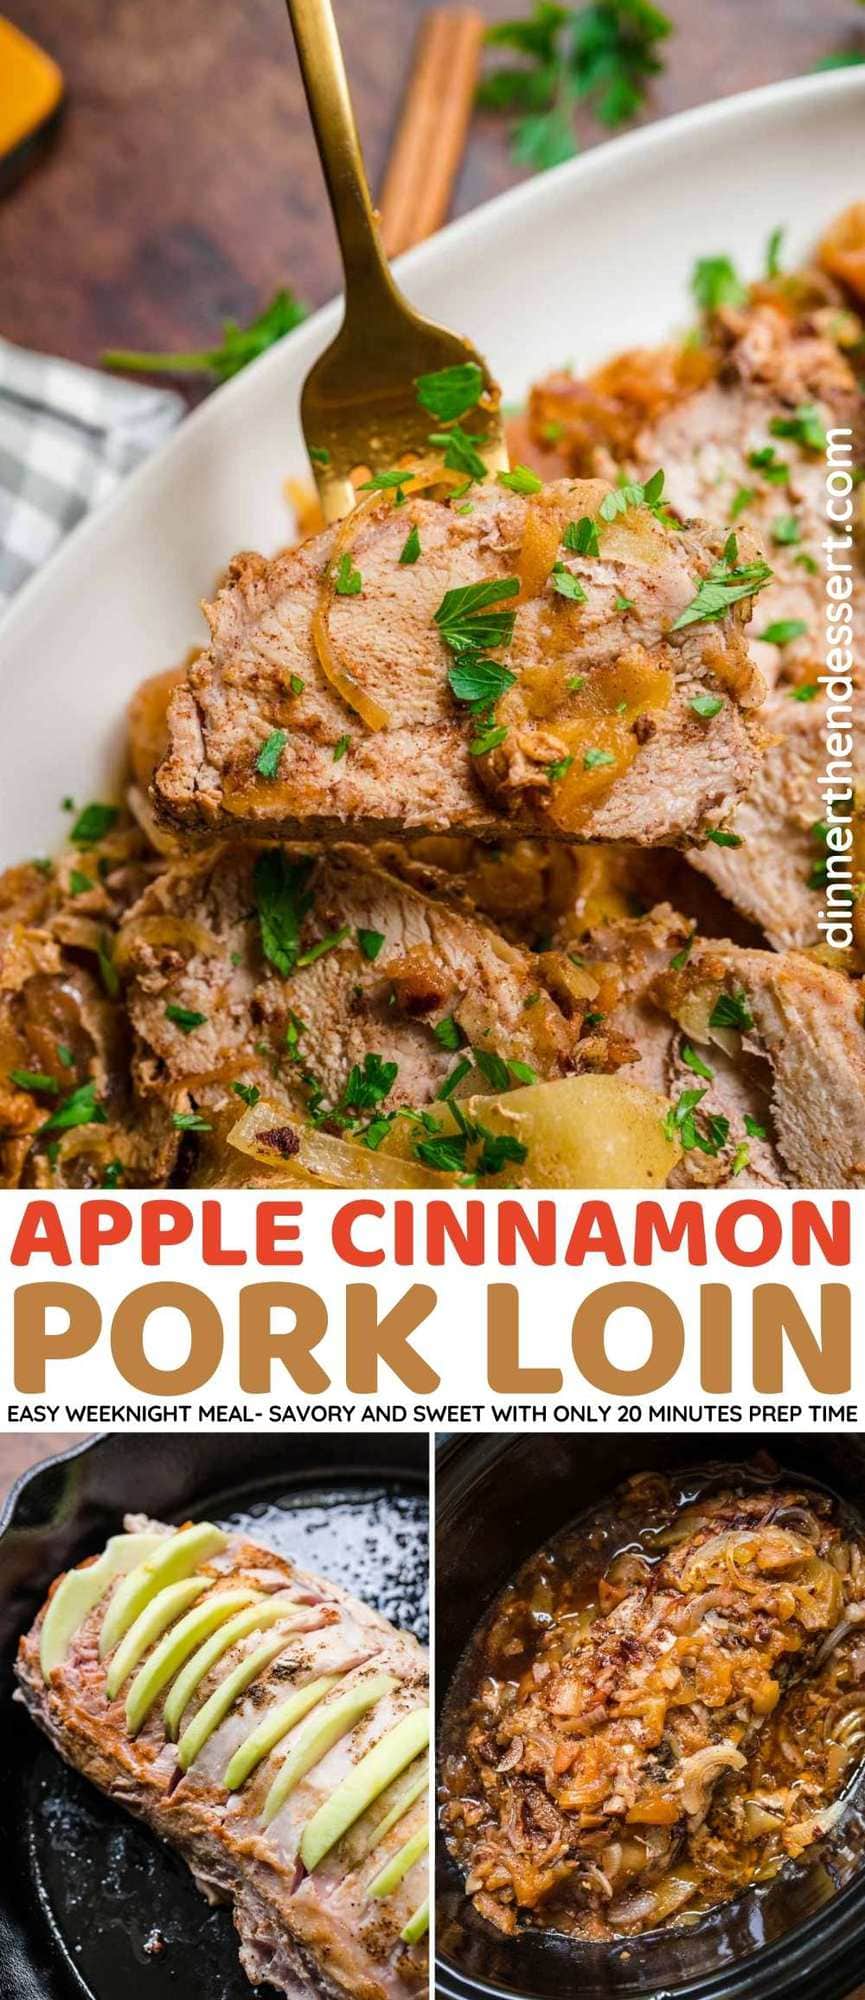 Apple Cinnamon Pork Loin collage